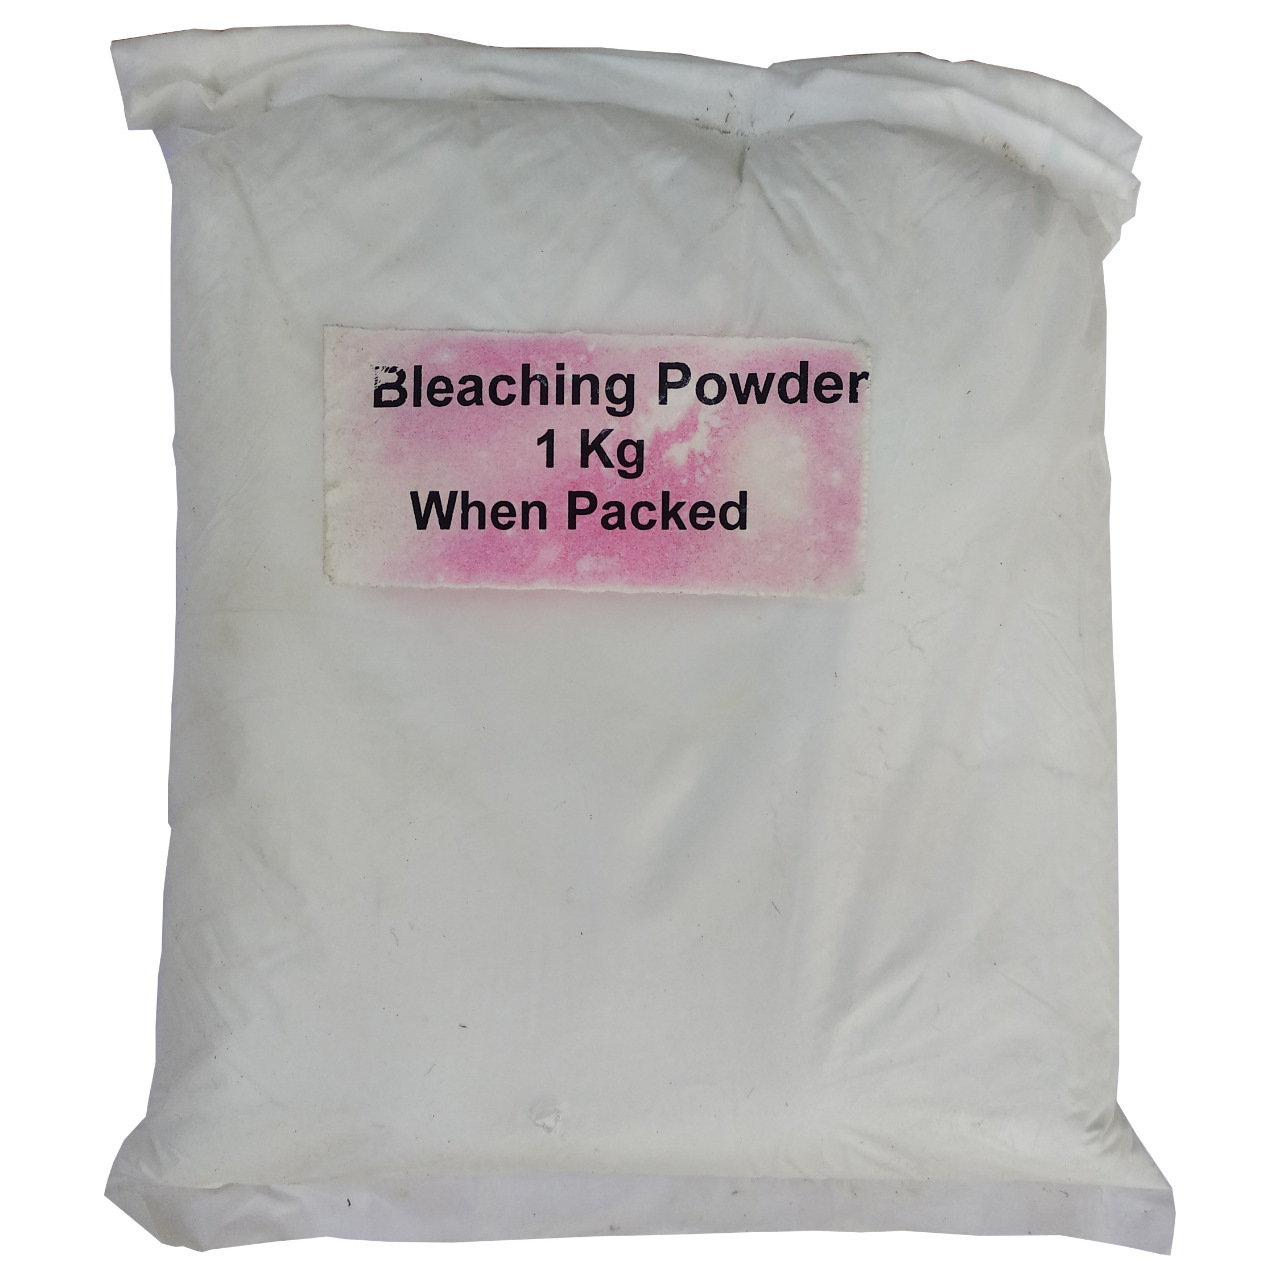 Bleaching Powder - 1 Kg